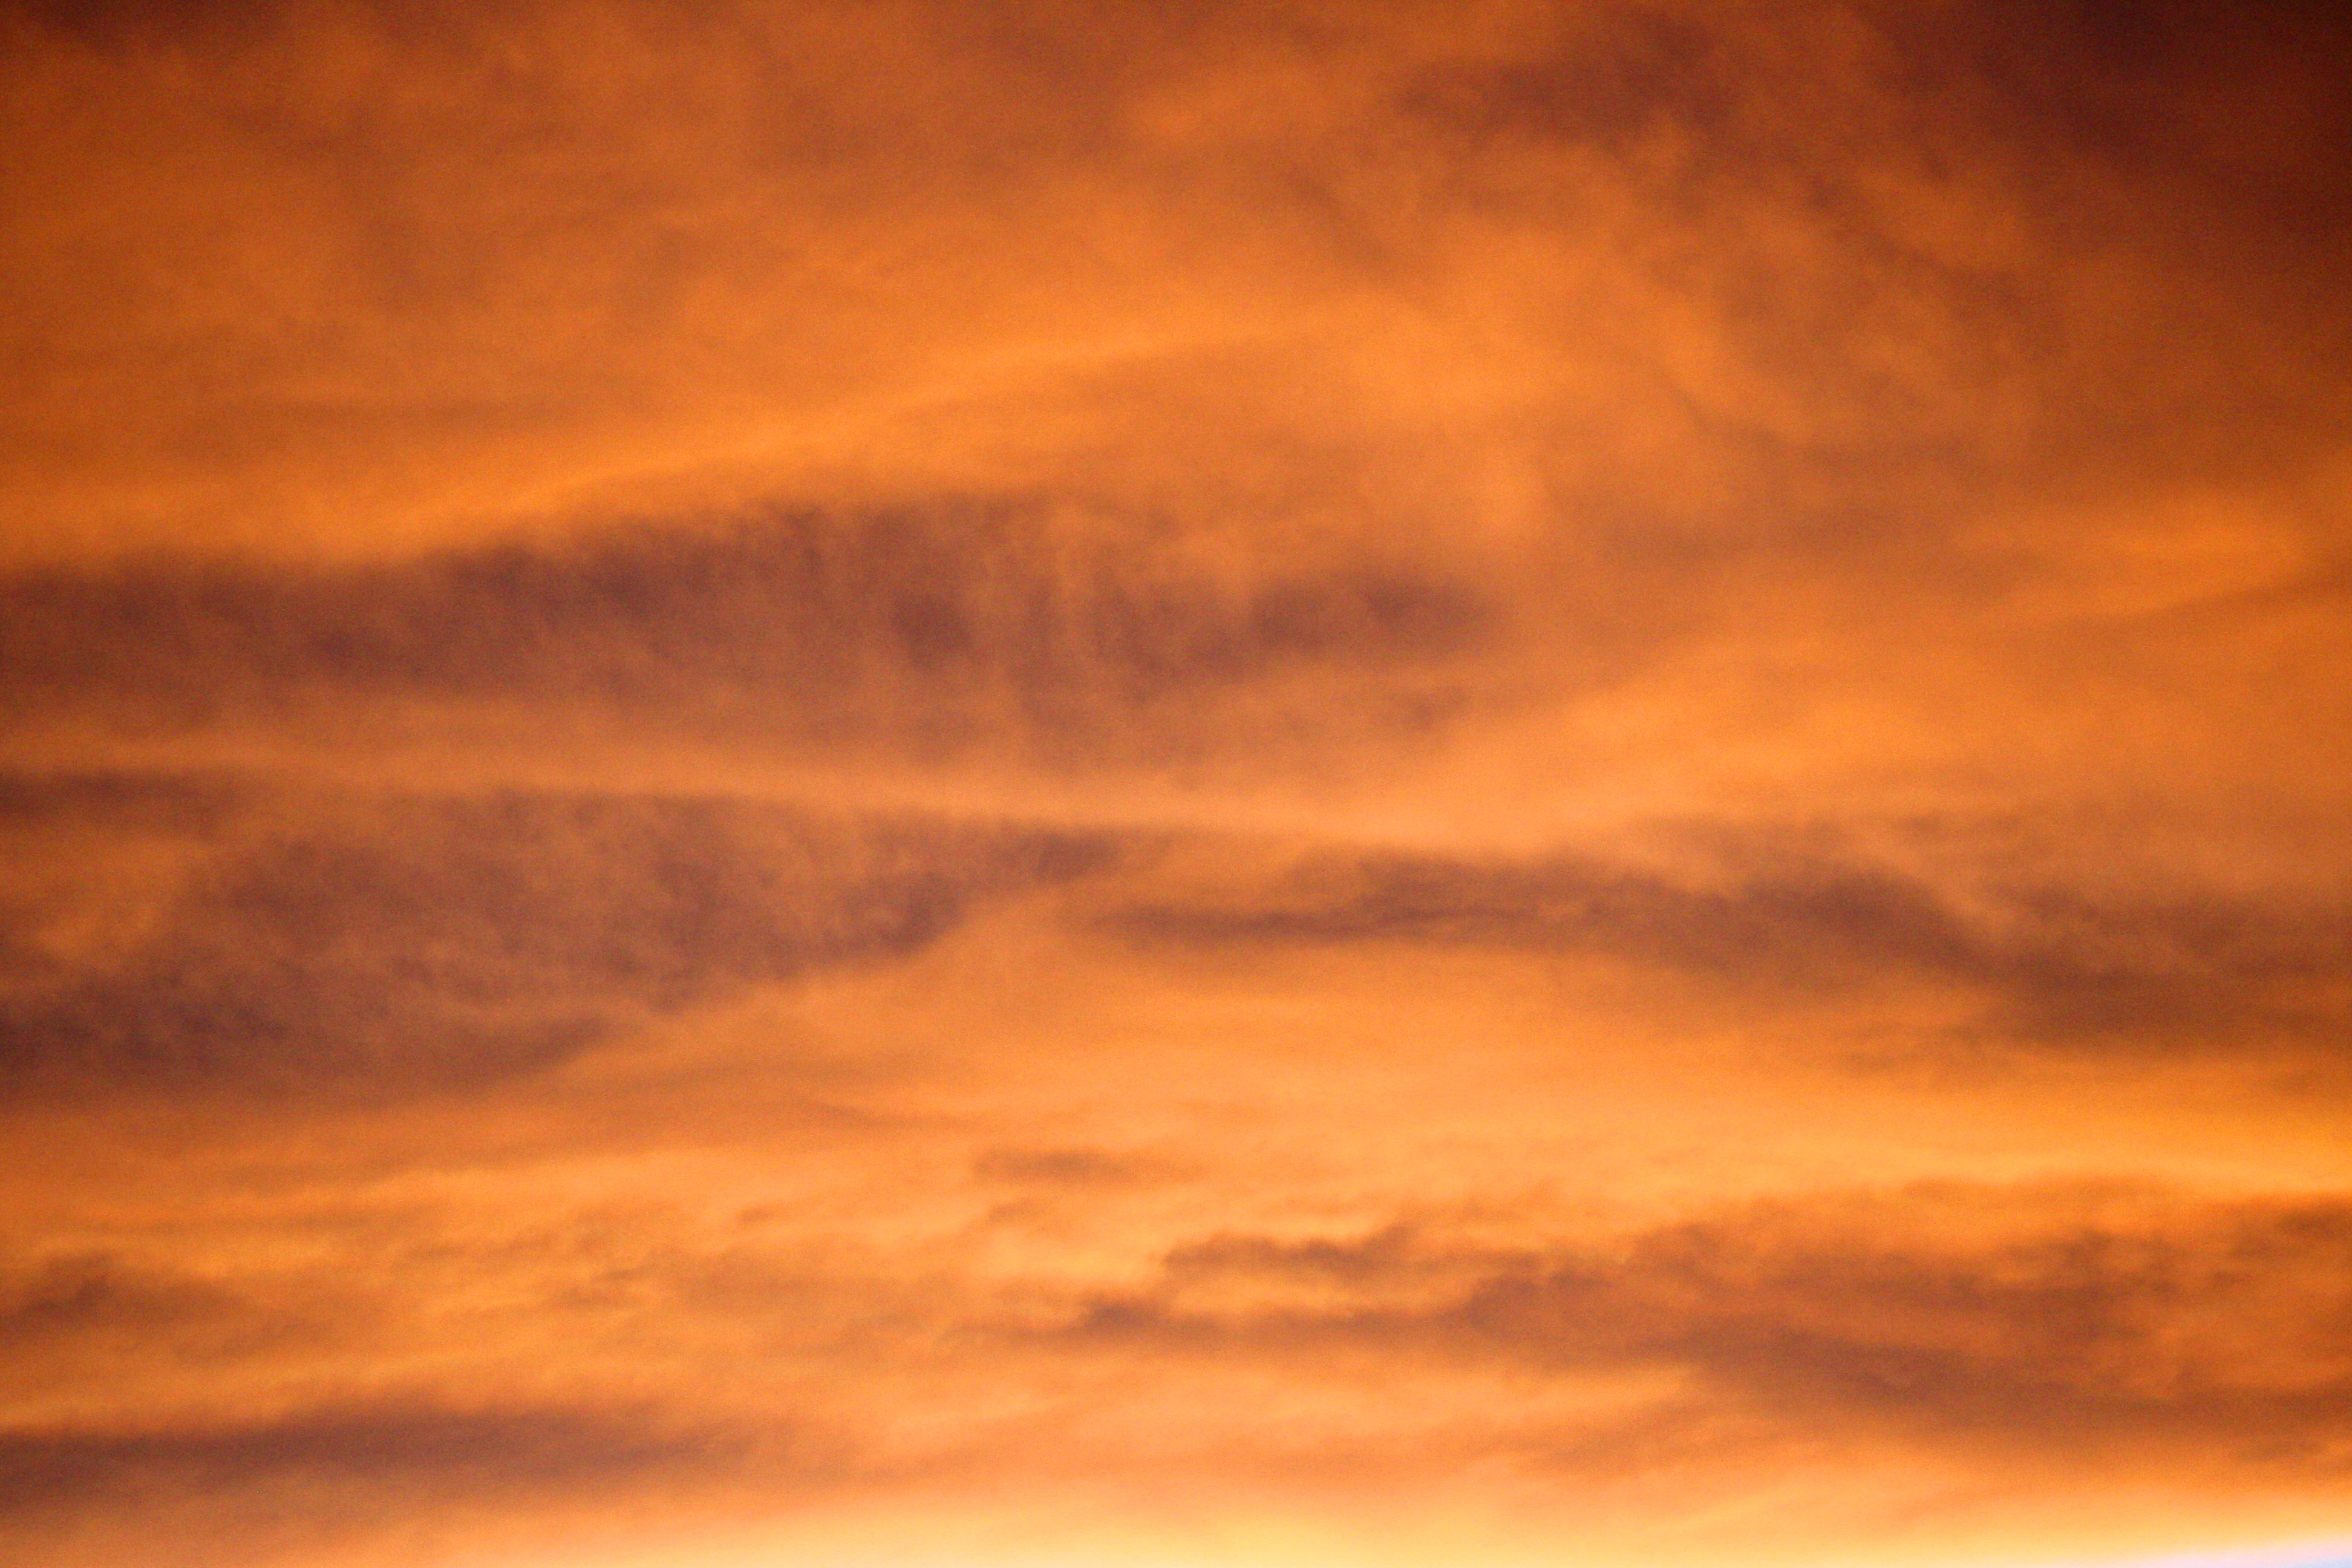 Sunset Sky Picture | Free Photograph | Photos Public Domain